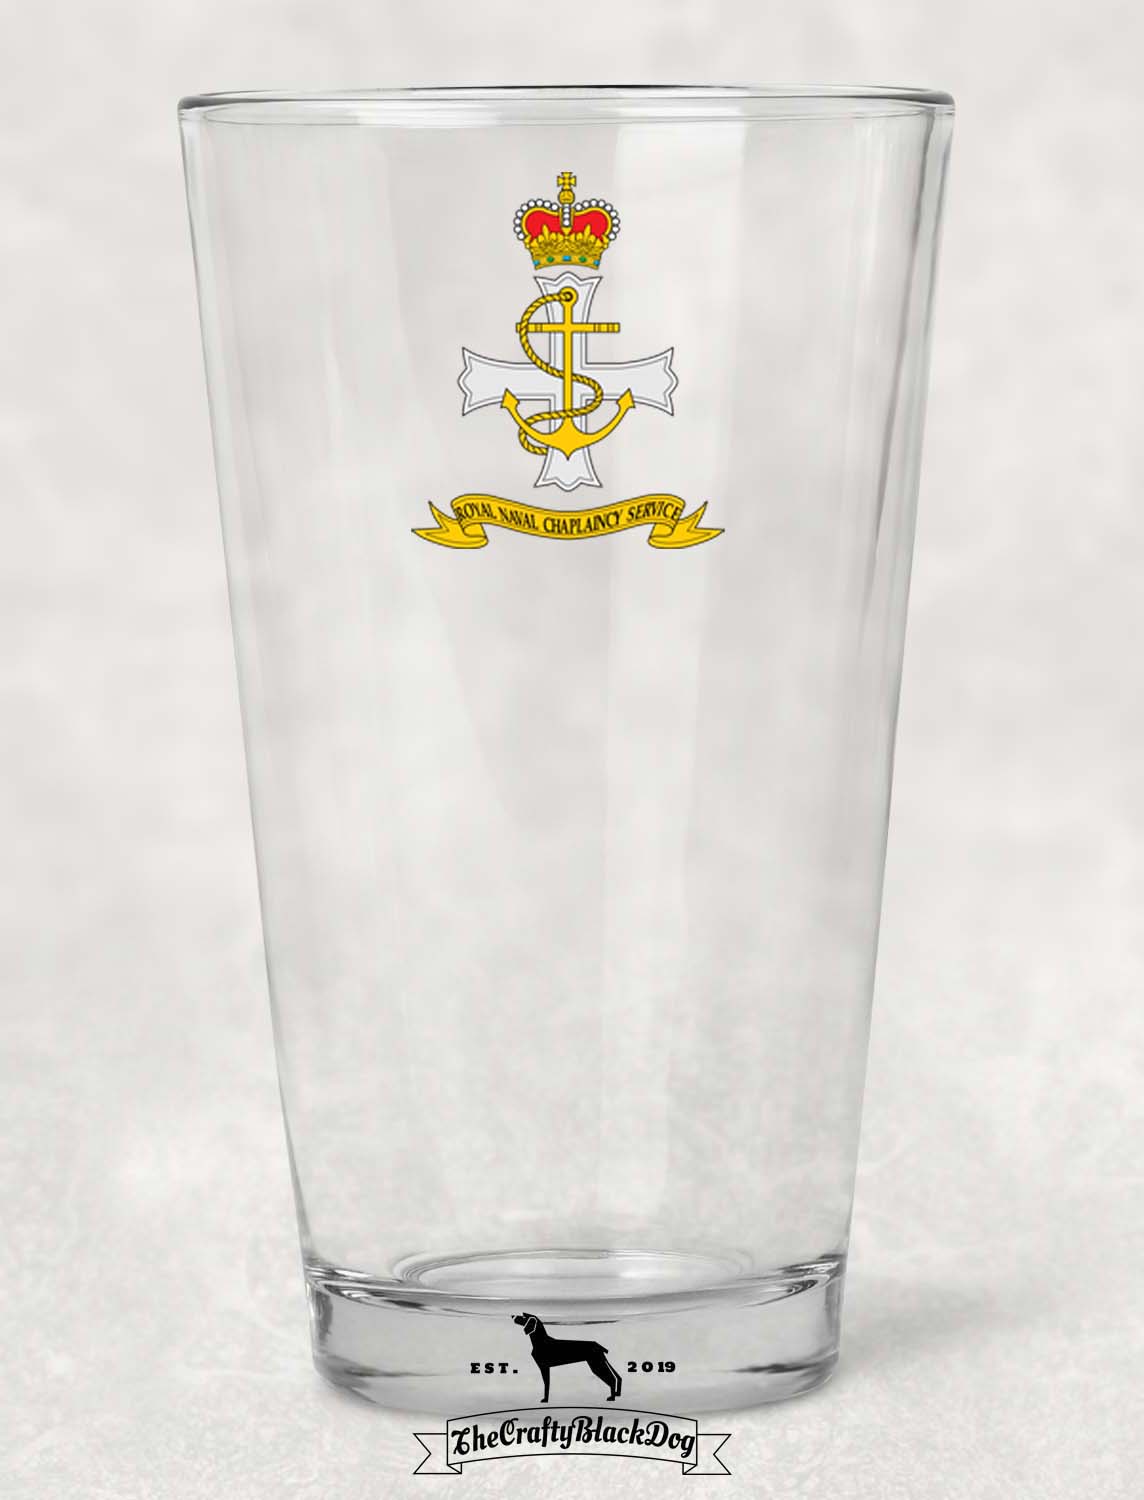 Royal Naval Chaplaincy Service - Pint Glass